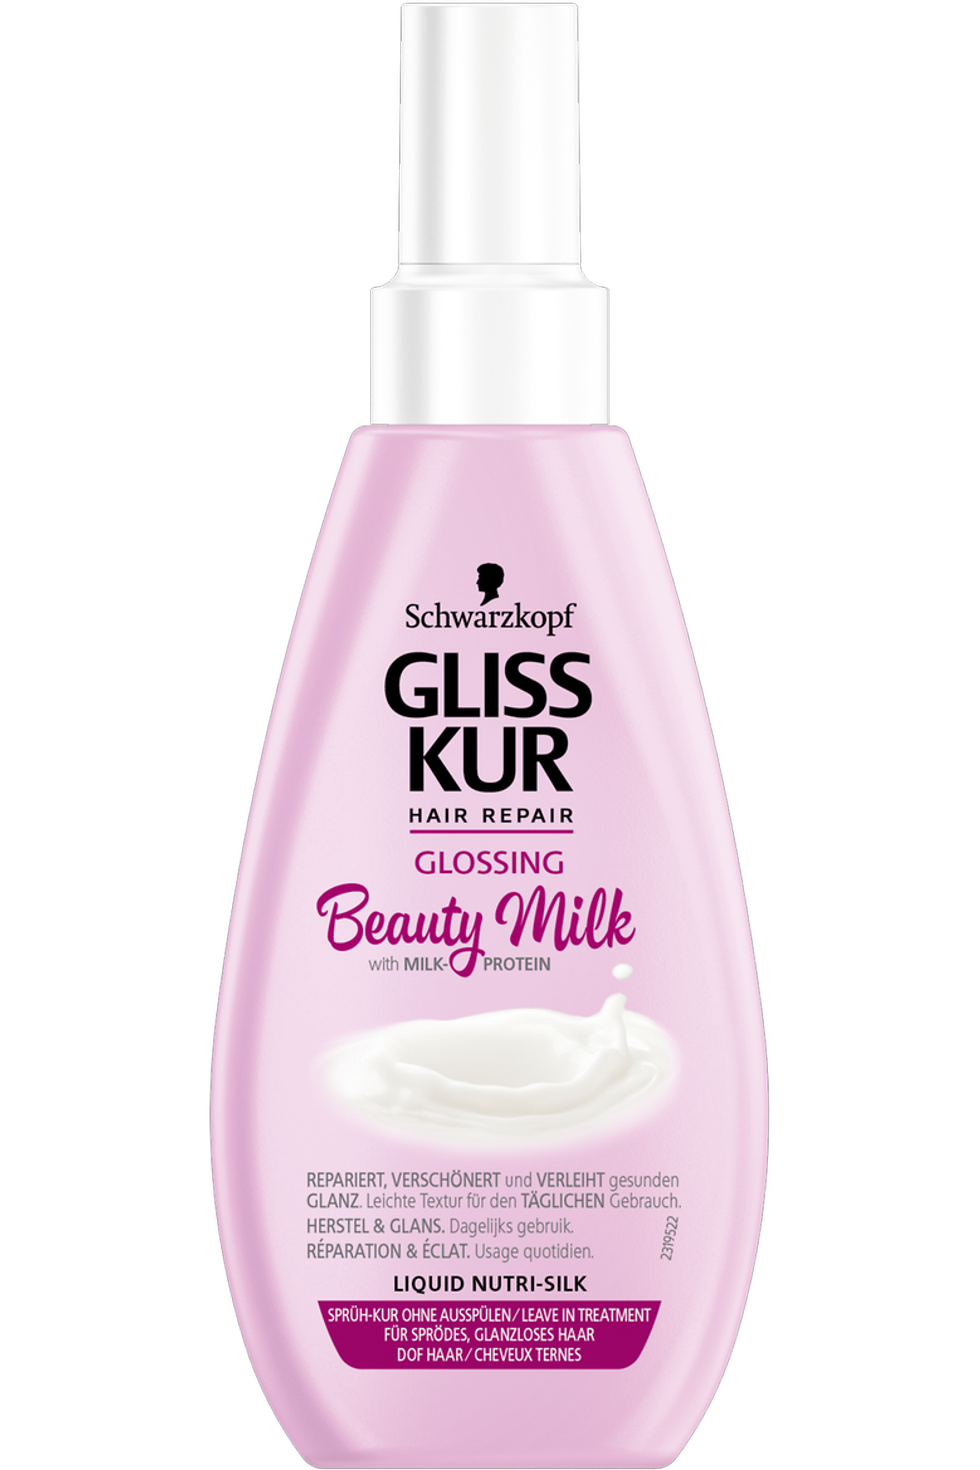 Gliss Kur Hair Repair Glossing Hair Repair Beauty Milk Sprühkur